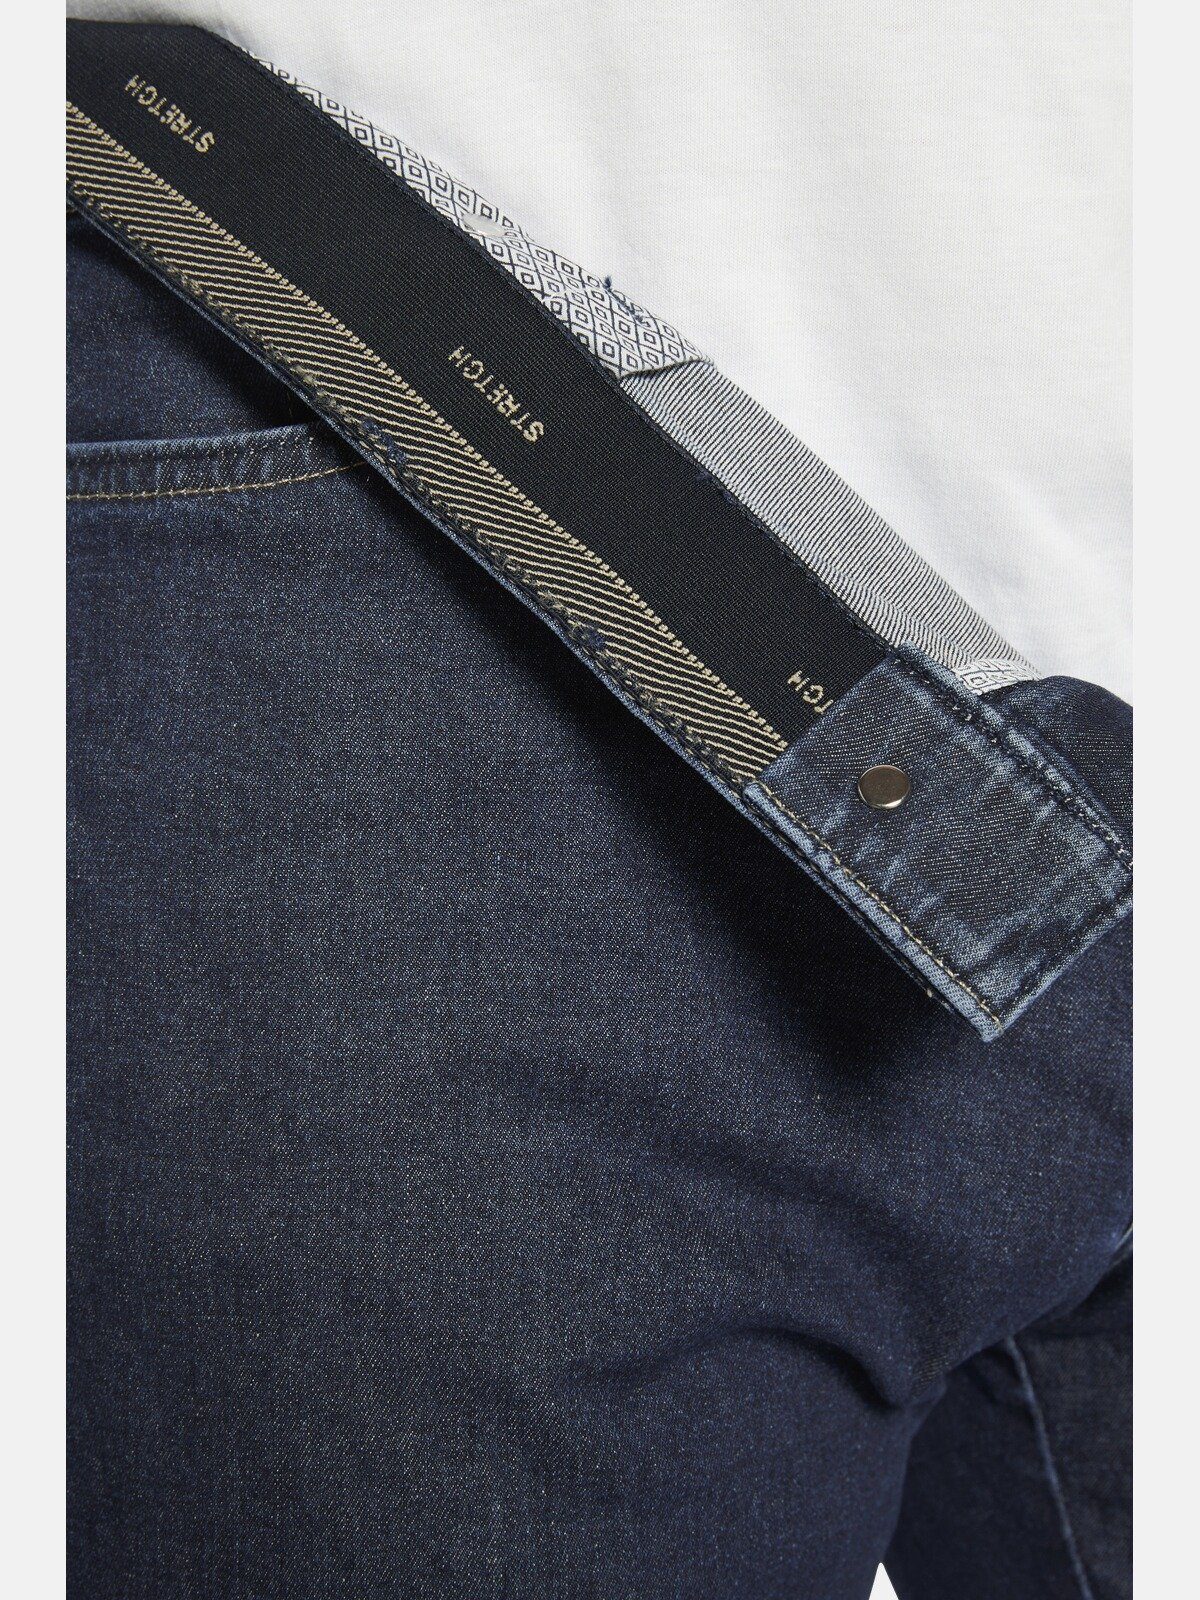 ODGARD Stretch-Effekt Comfort-fit-Jeans mit Jan Vanderstorm dunkelblau